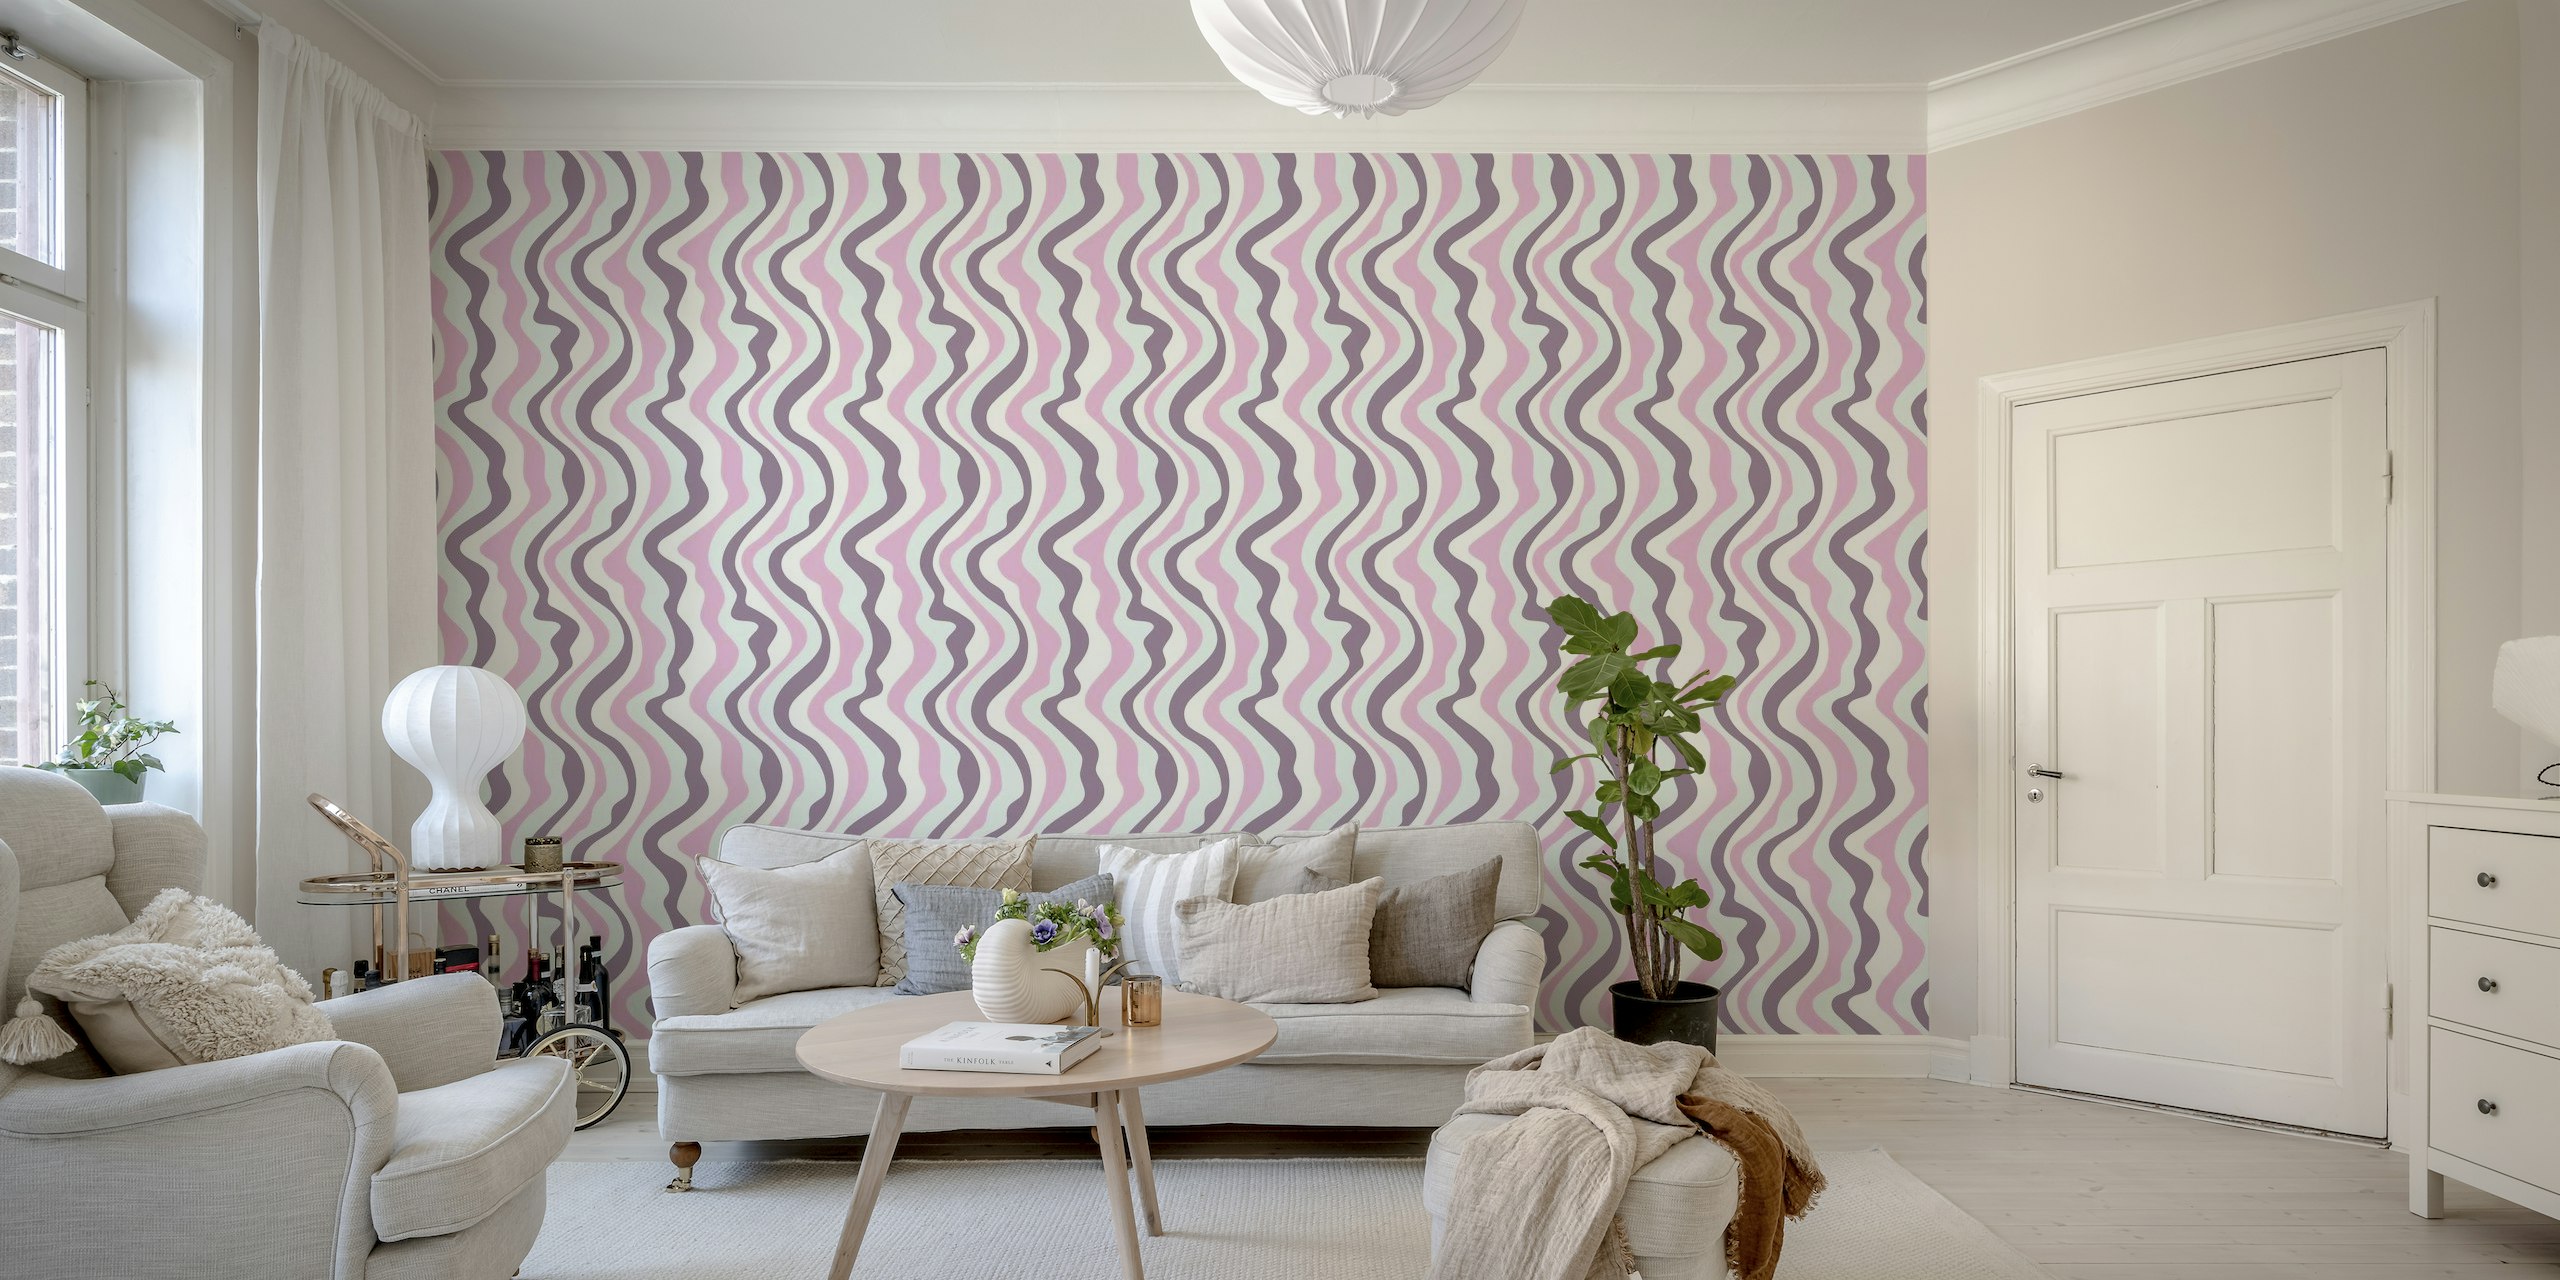 GOOD VIBRATIONS Mod Wavy Stripes Pink Plum wallpaper